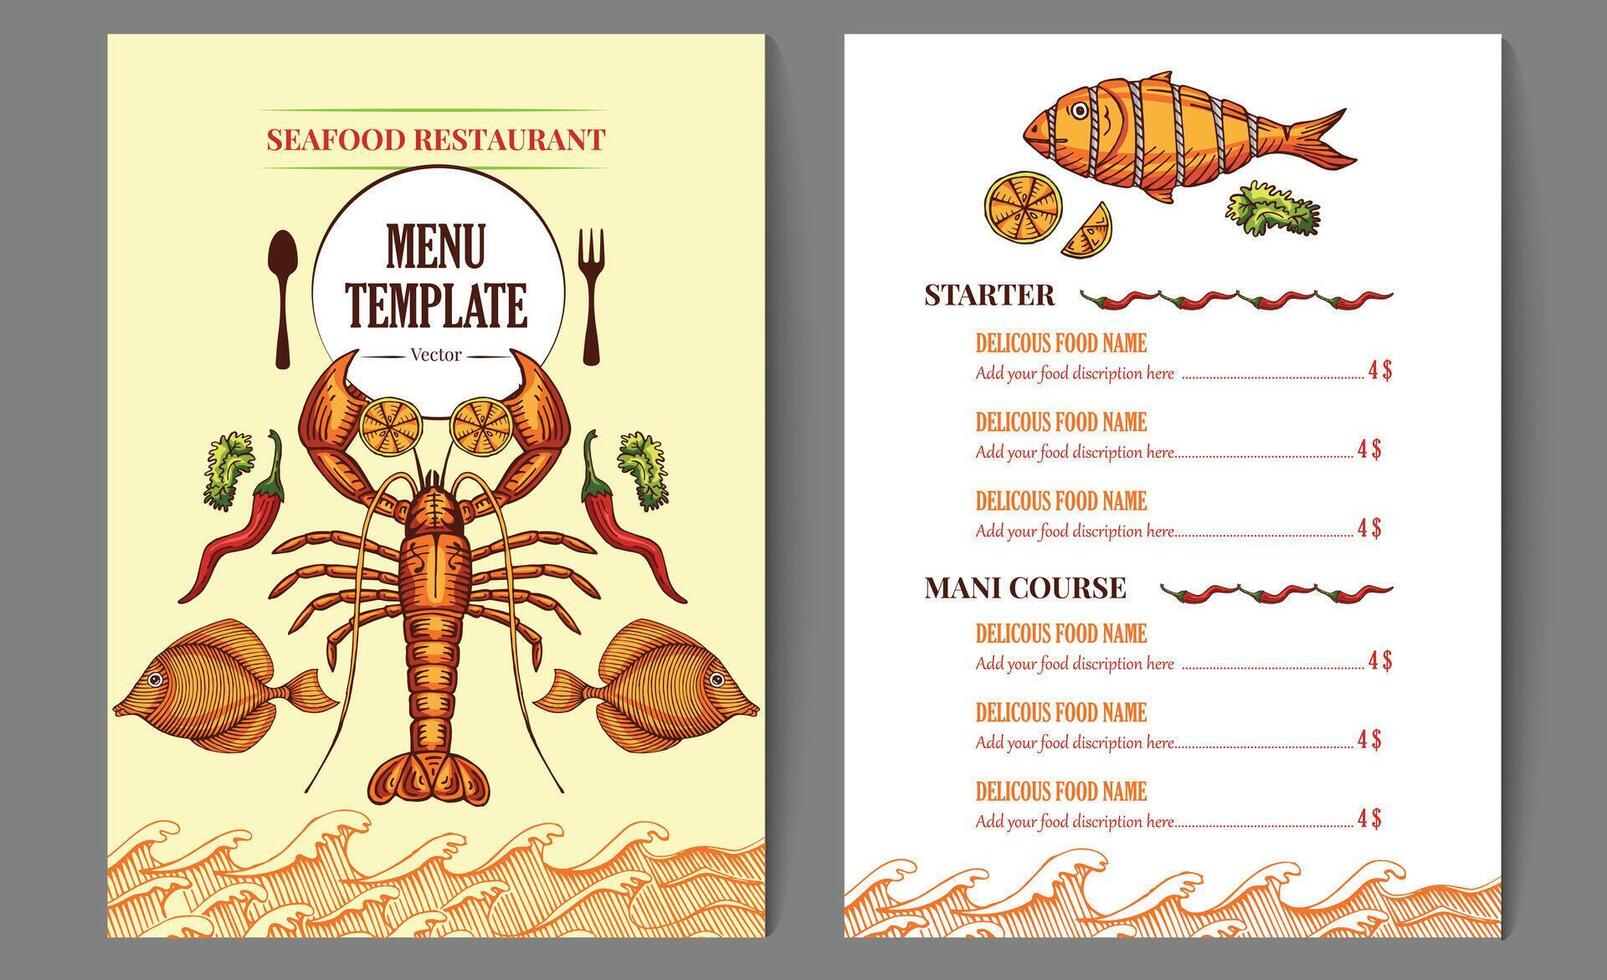 sea food restaurant cafe menu template design. food menu flyer, hand drawn illustration drawing vector